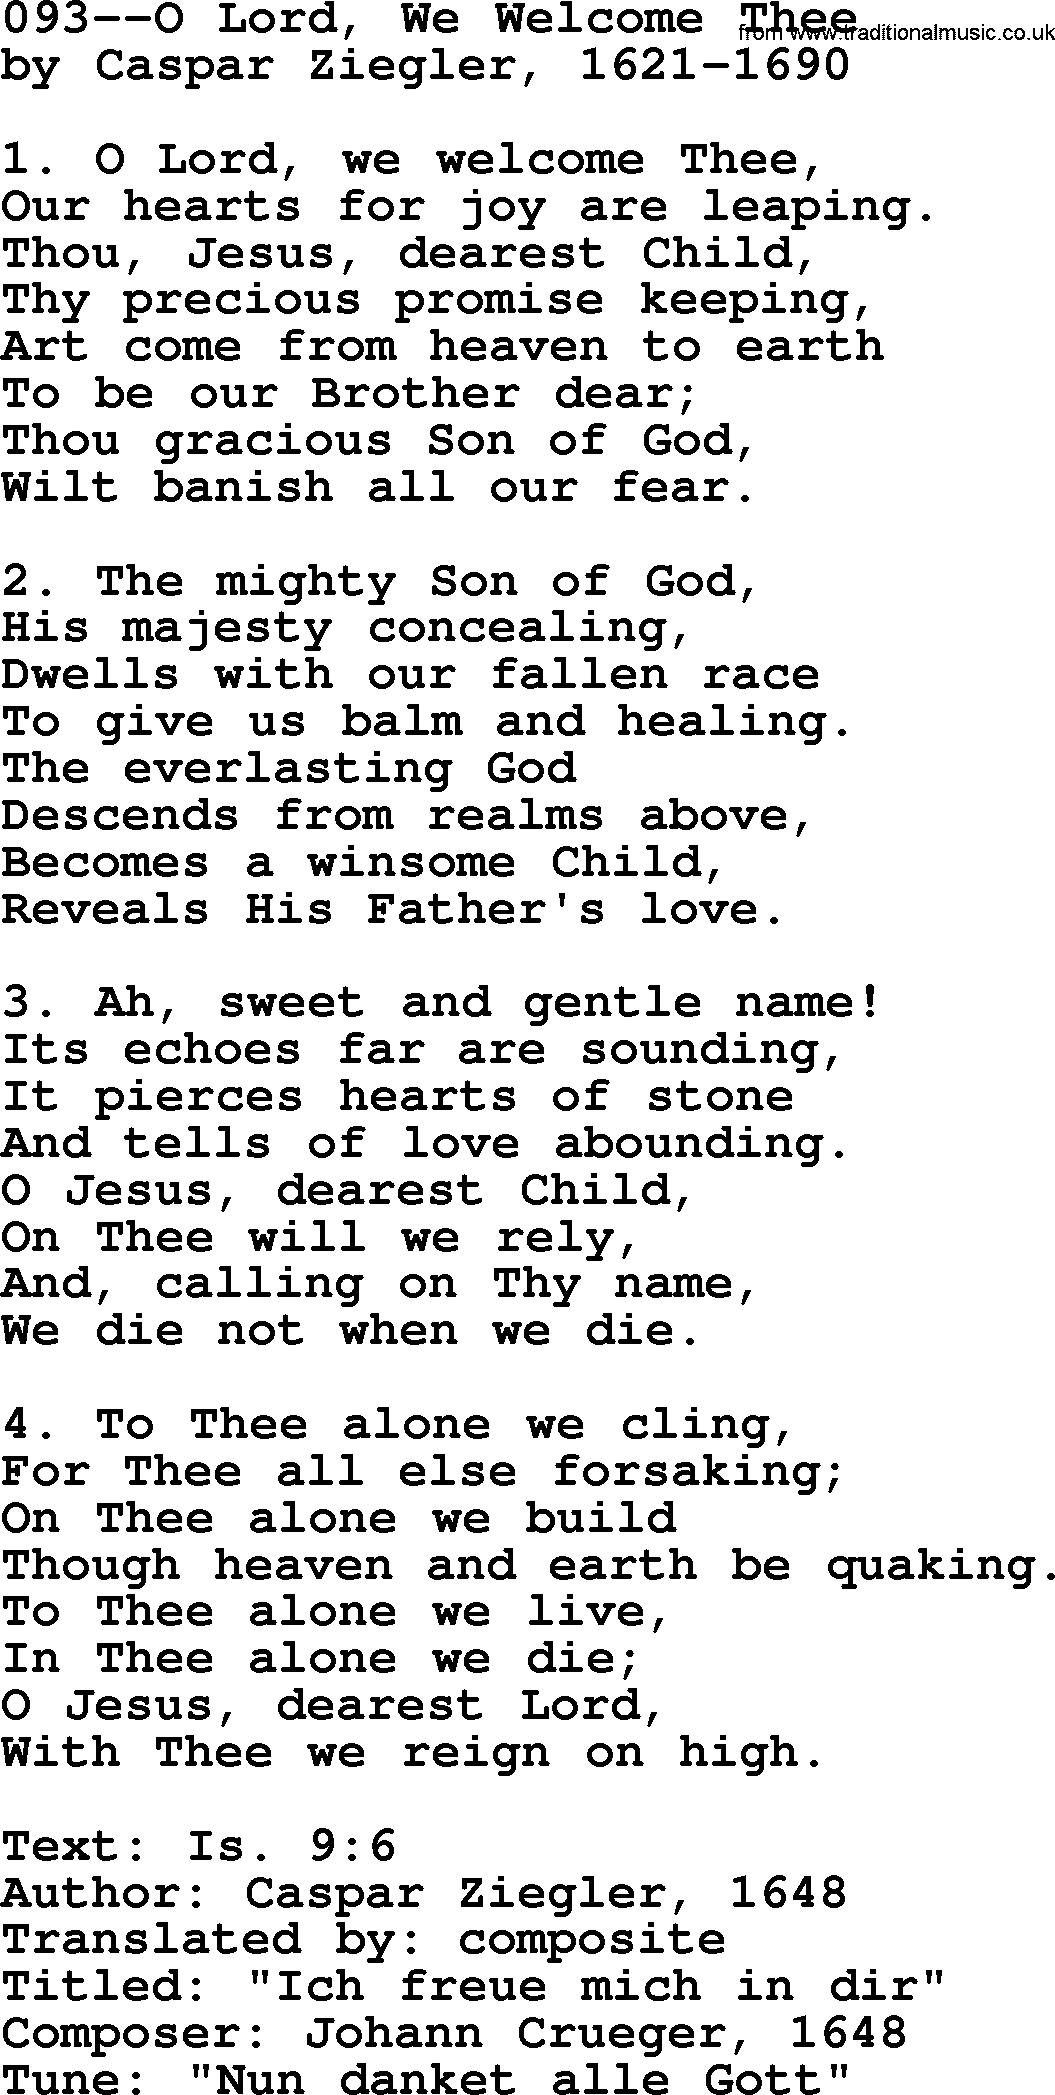 Lutheran Hymn: 093--O Lord, We Welcome Thee.txt lyrics with PDF